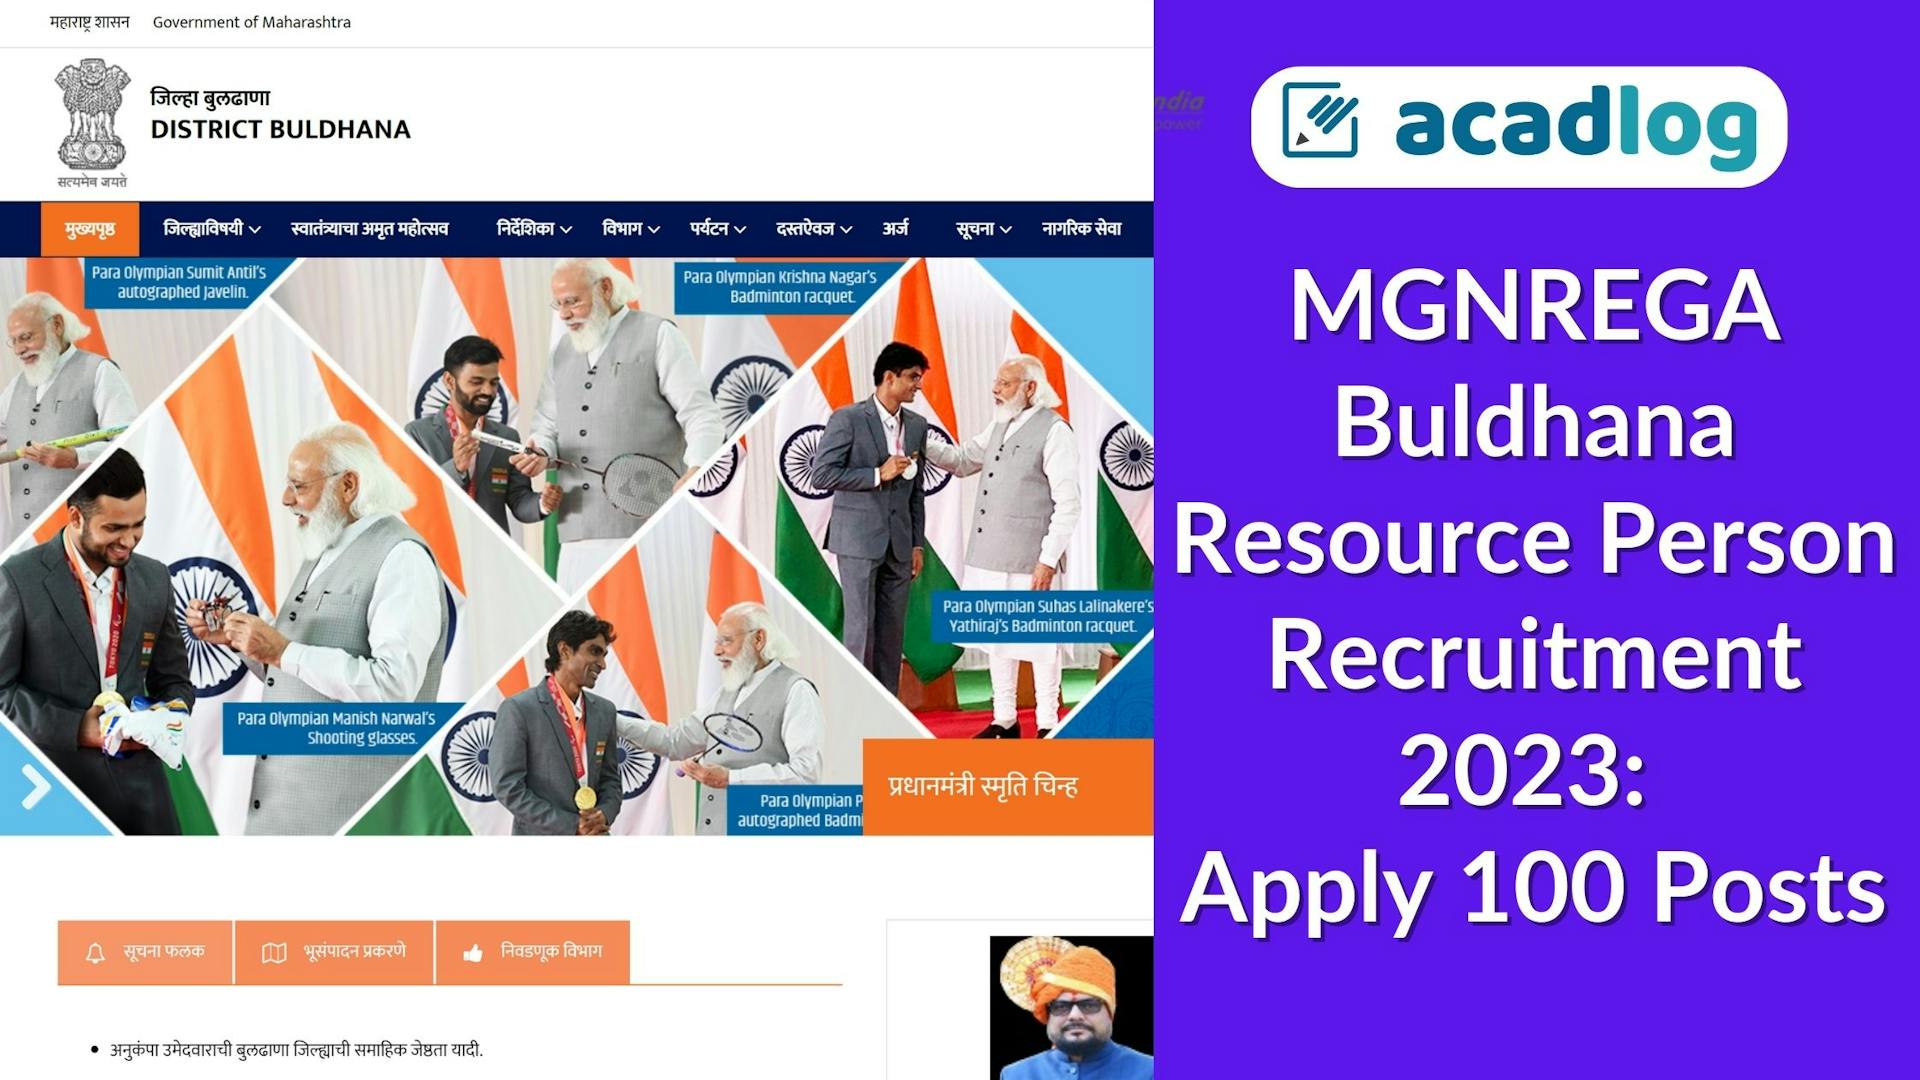 MGNREGA Buldhana Resource Person Recruitment 2023: Apply 100 Posts